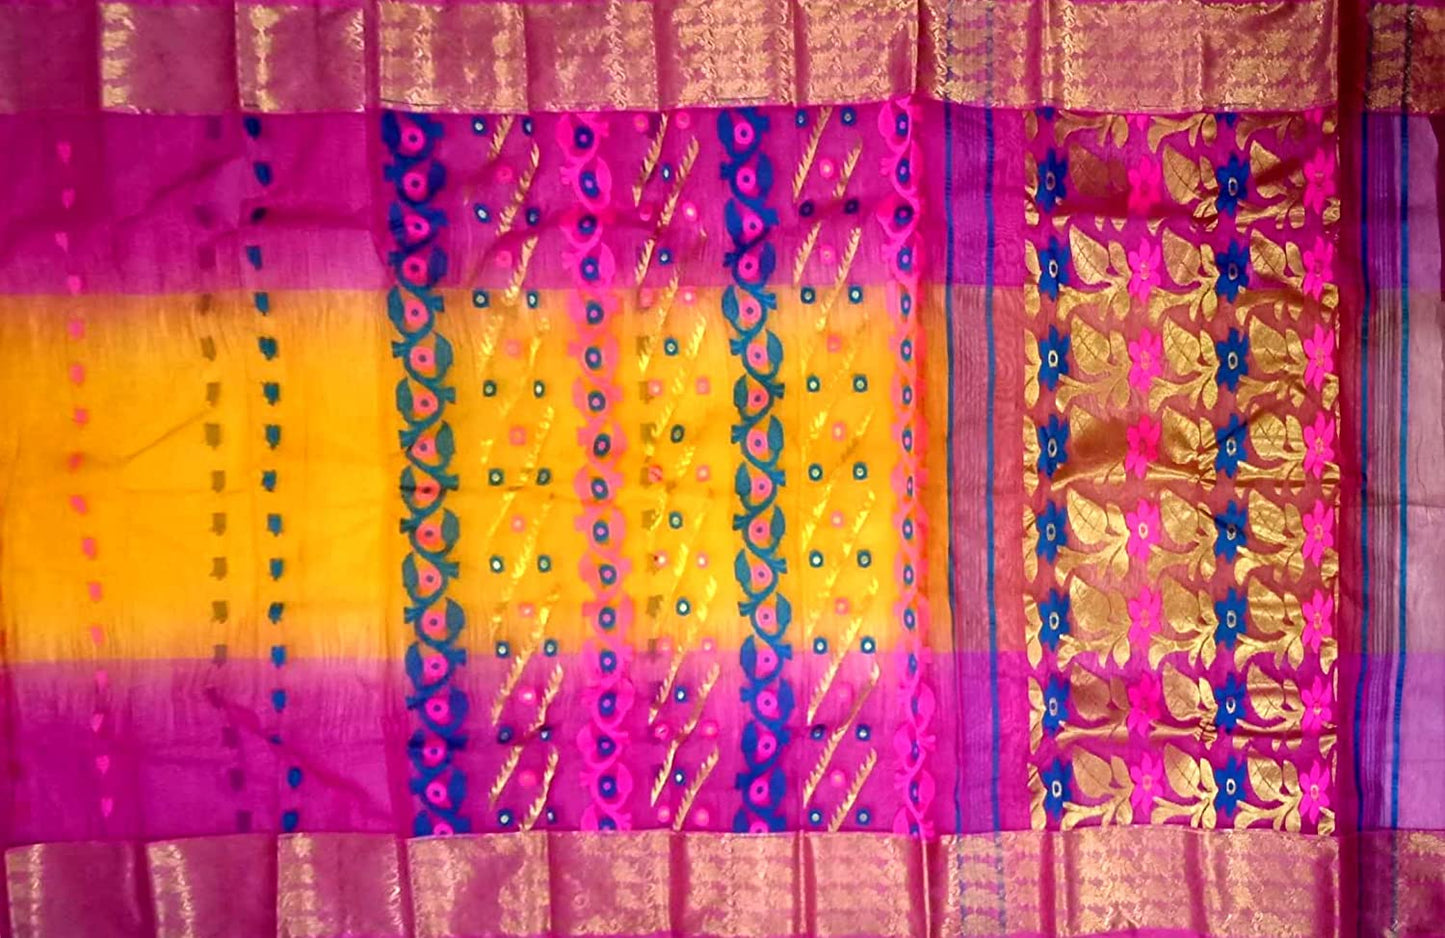 Pradip Fabrics Ethnic Women's Tant Silk Pink and Yellow Color Baluchari Saree